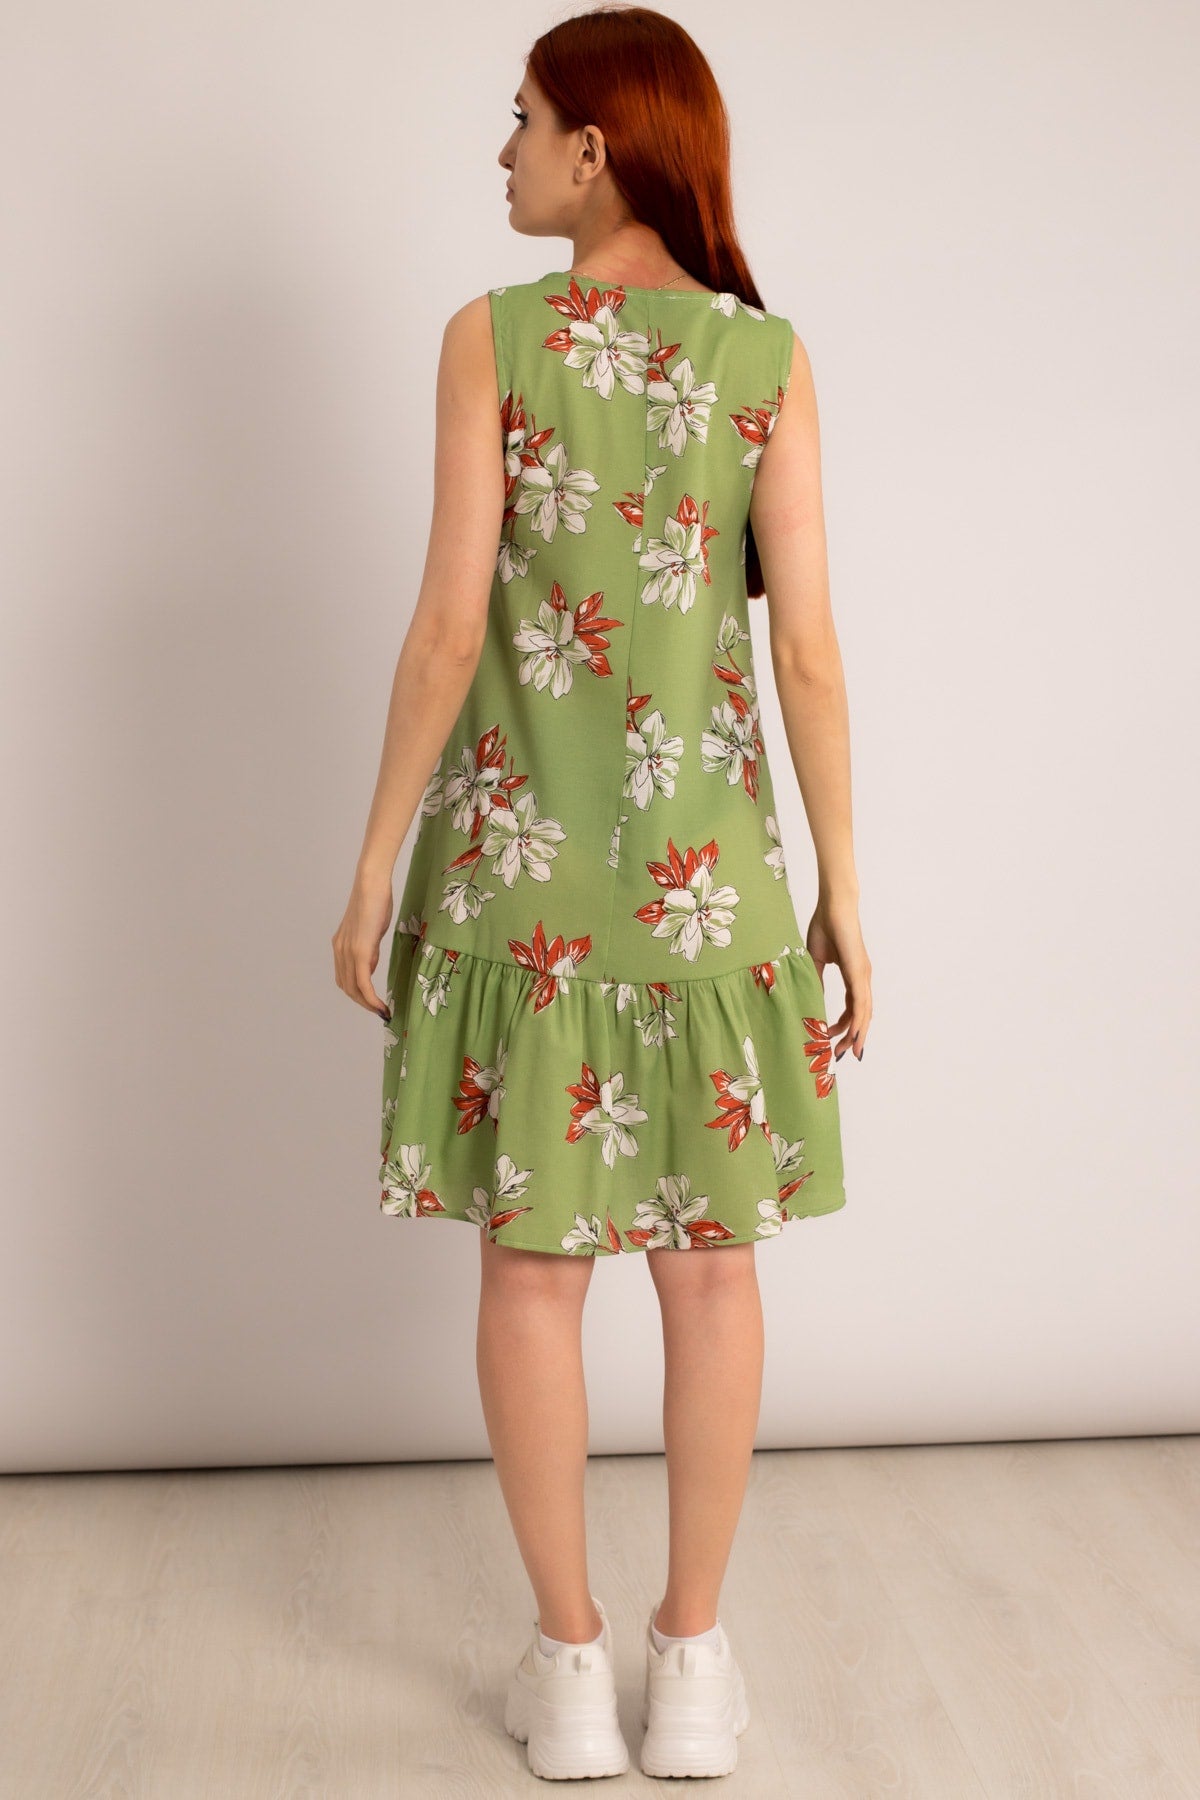 Female peanut green patterned skirt frilly sleeveless dress ARM-23Y001049